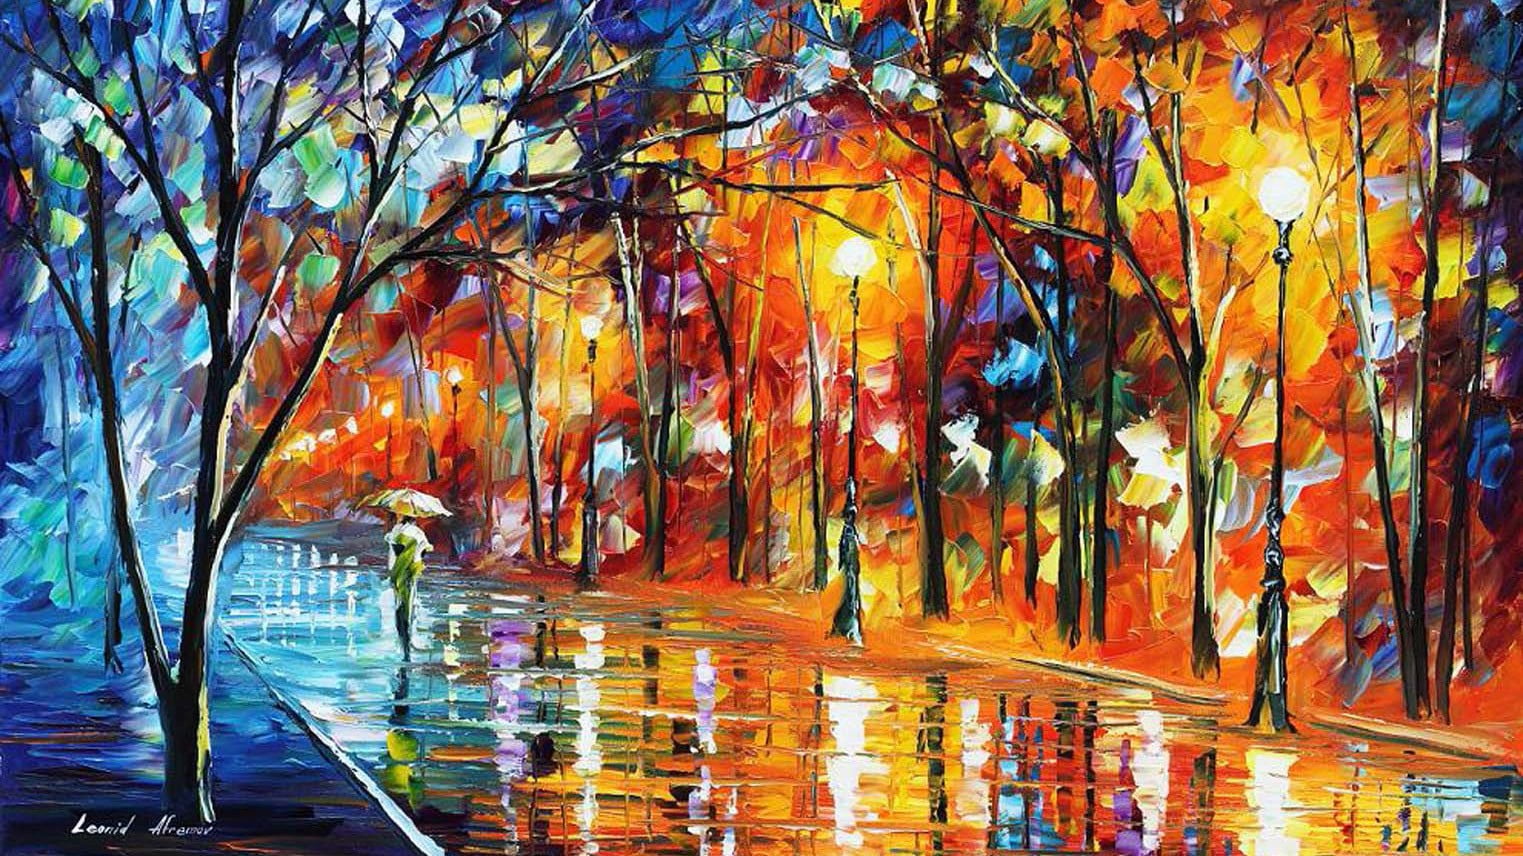 Singed Park With Lights Painting, Leonid Afremov, Autumn, - Leonid Afremov , HD Wallpaper & Backgrounds